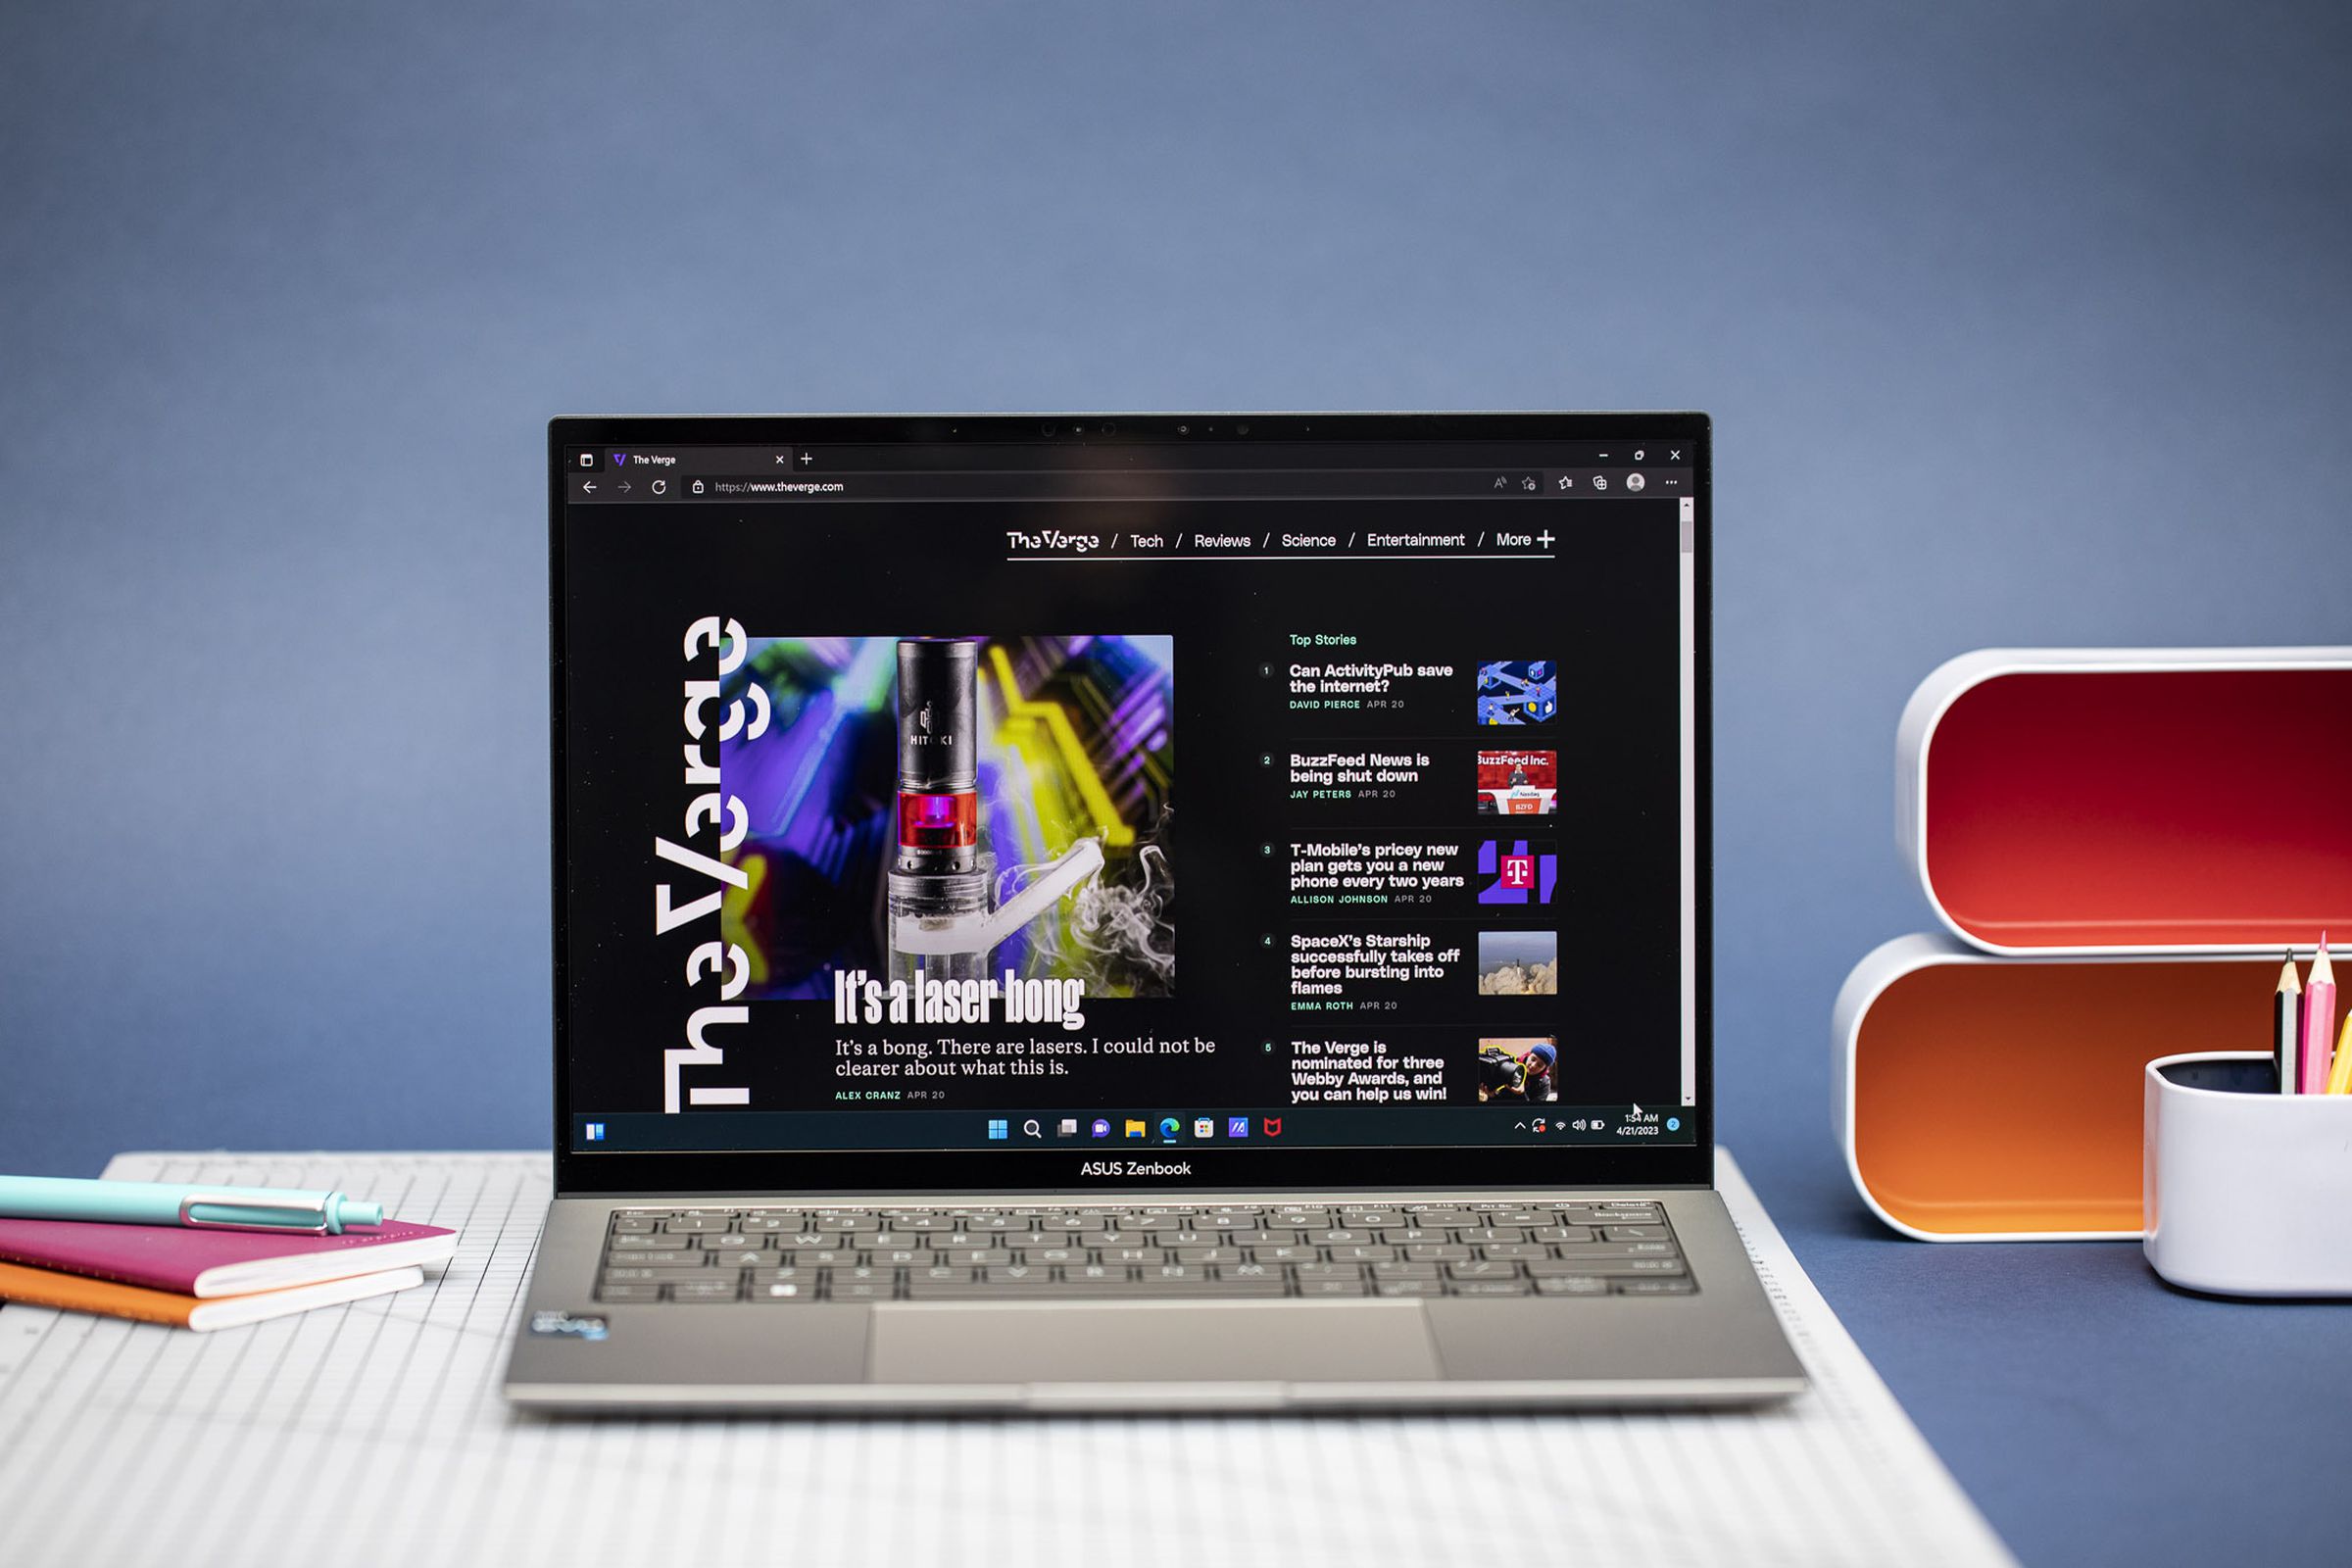 Best Laptop 2023: Asus Zenbook S 13 OLED displaying The Verge homepage.